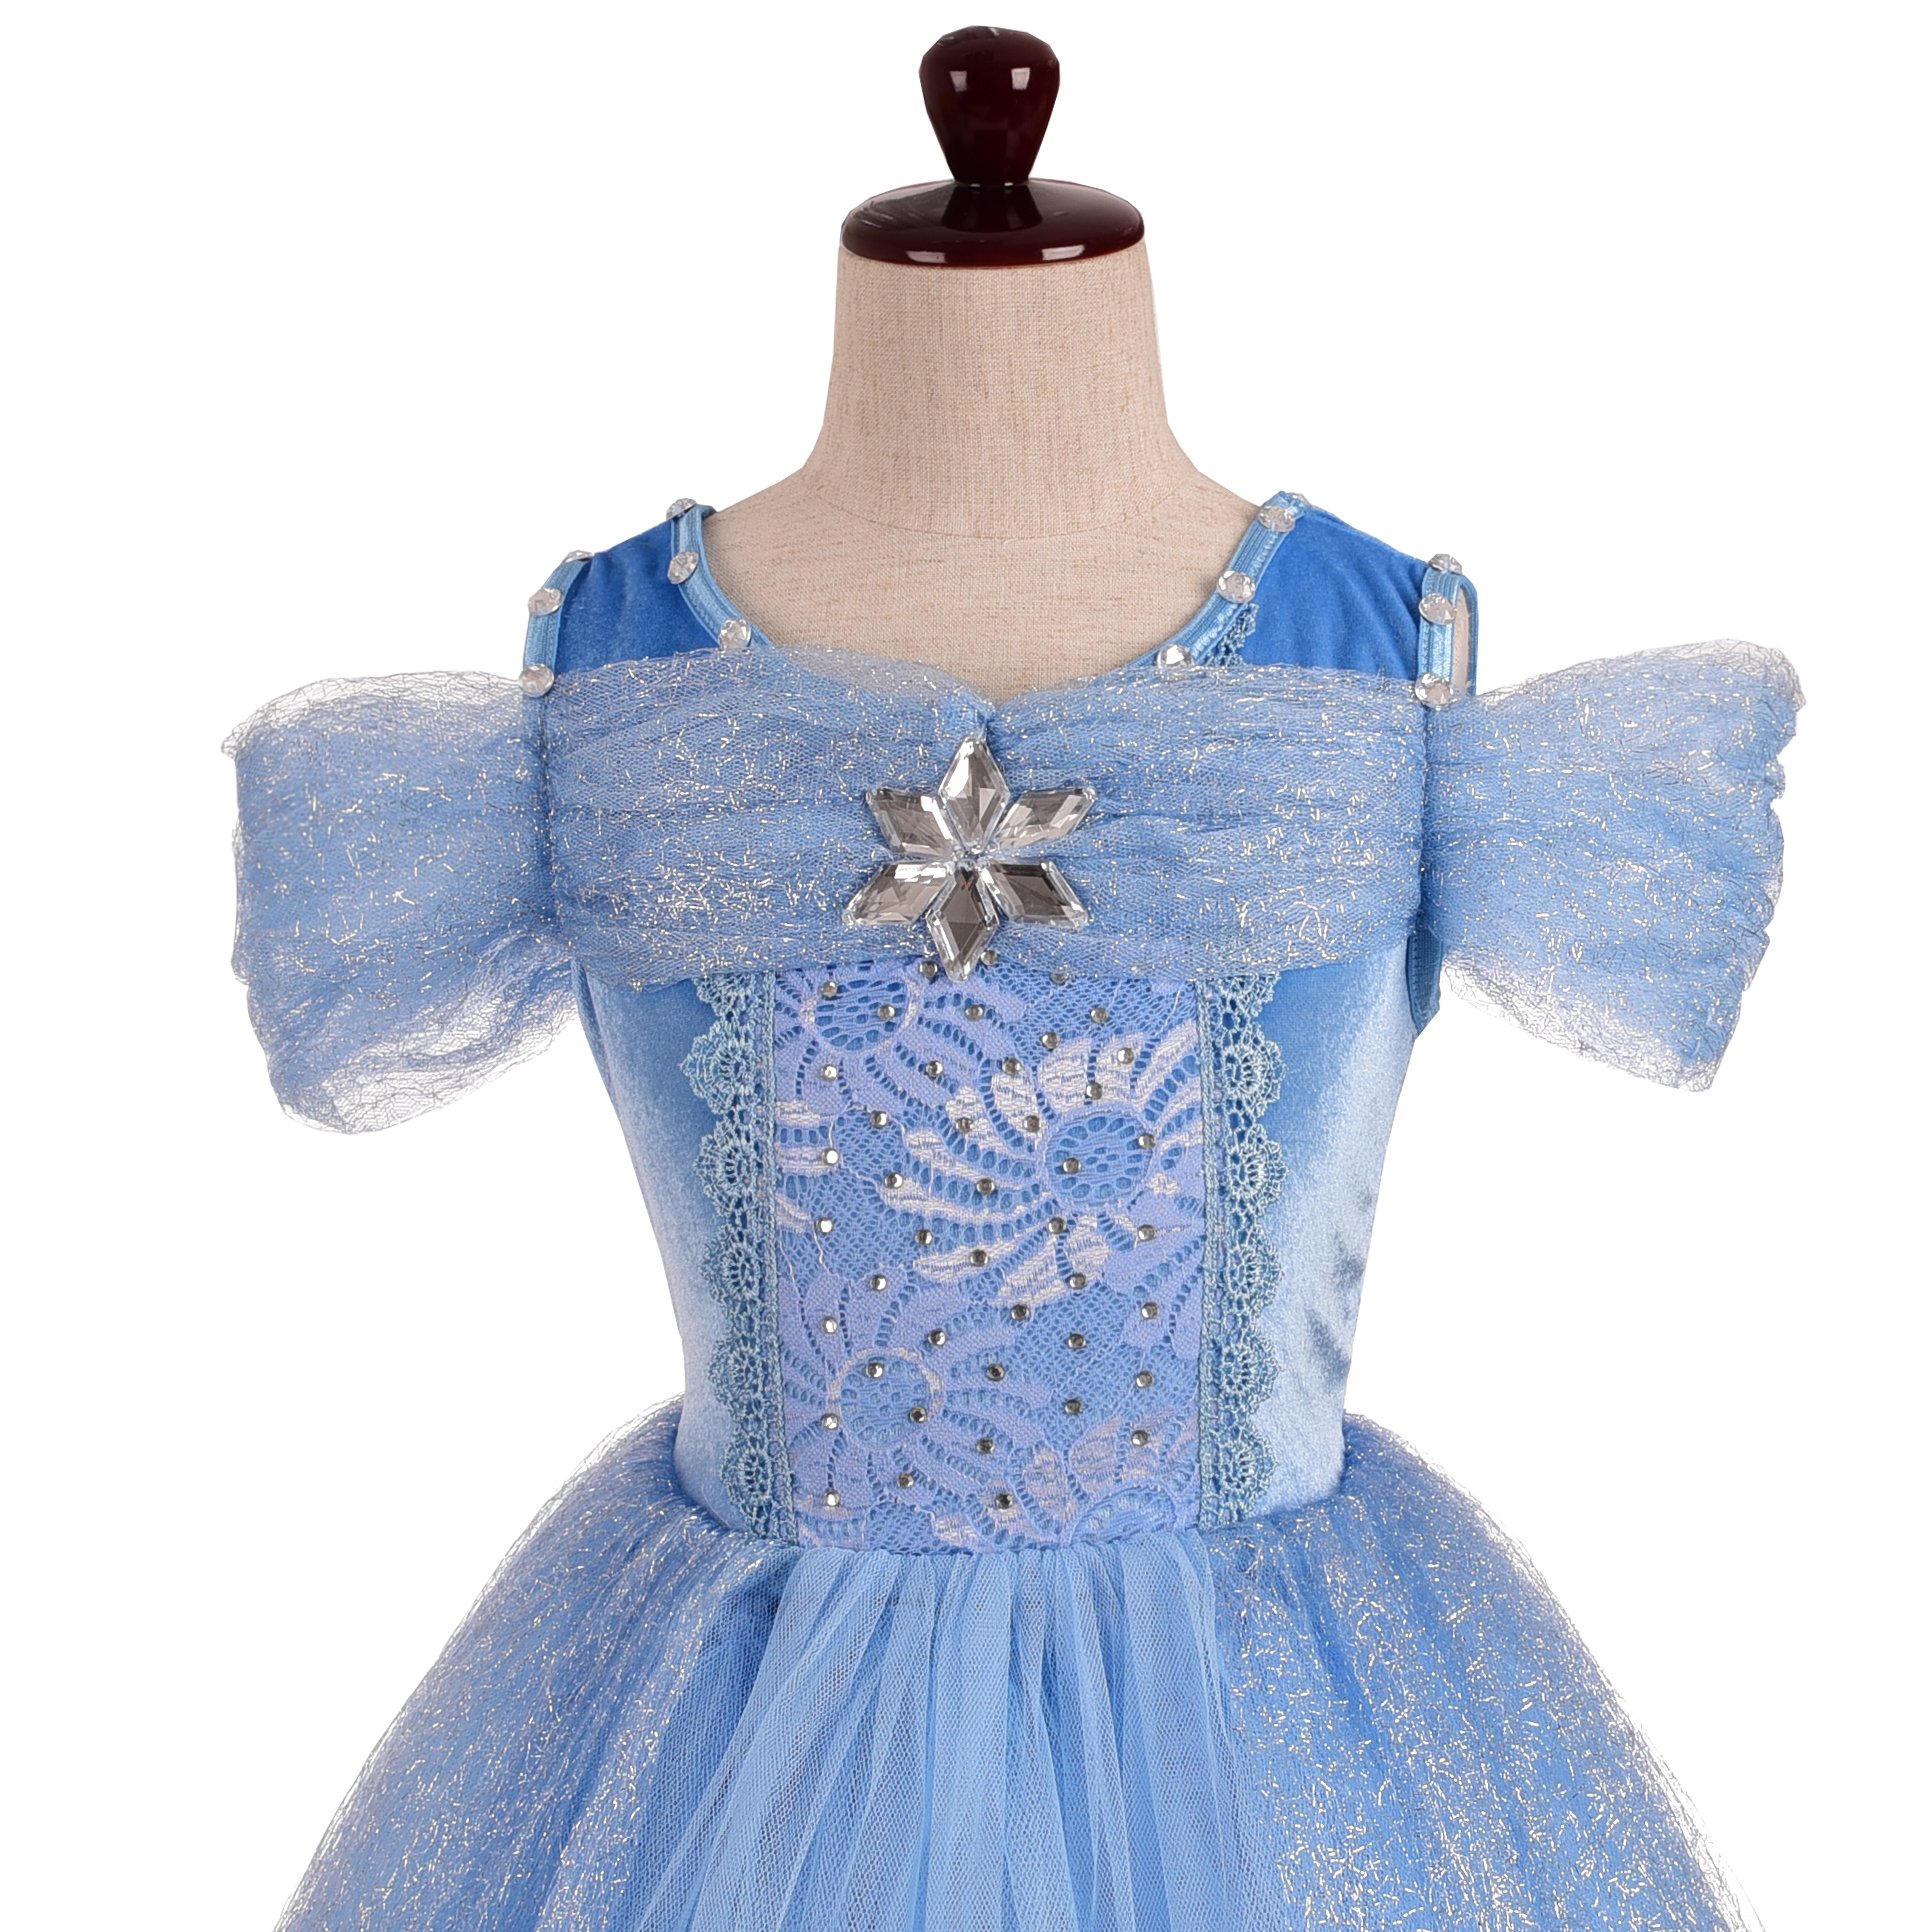 Dressy Daisy Girls' Princess Dress Costume Christmas Halloween Fancy Dresses Up Butterfly Size 5-6 Blue